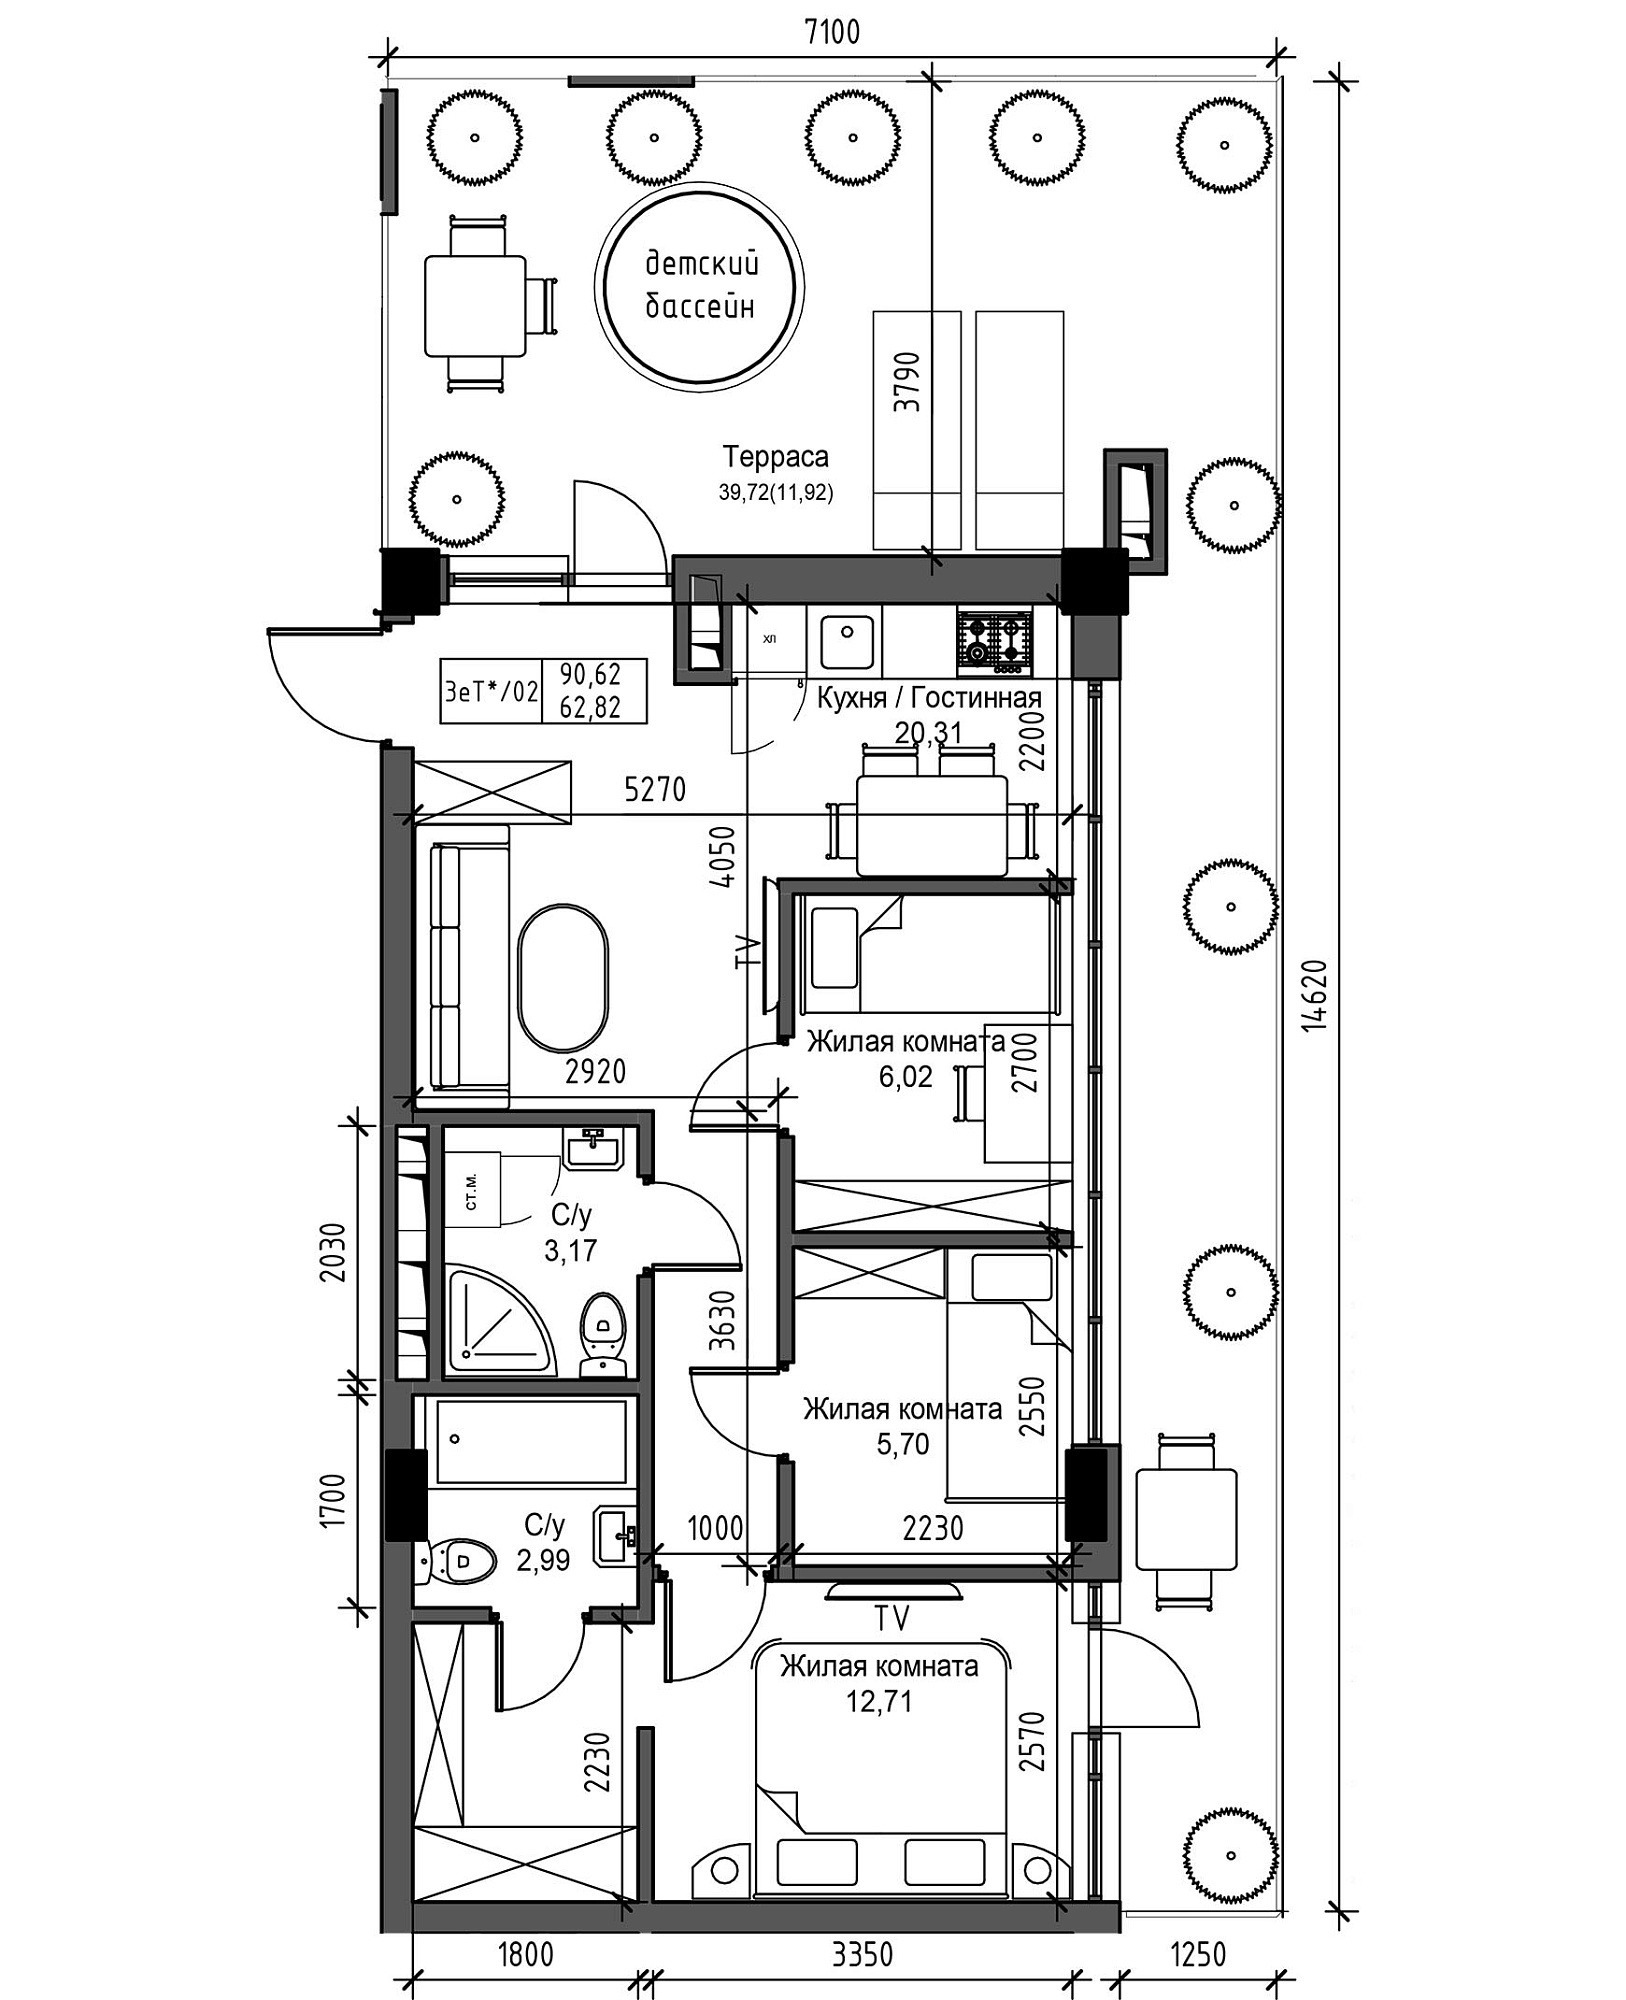 Планування 3-к квартира площею 62.82м2, UM-003-10/0101.